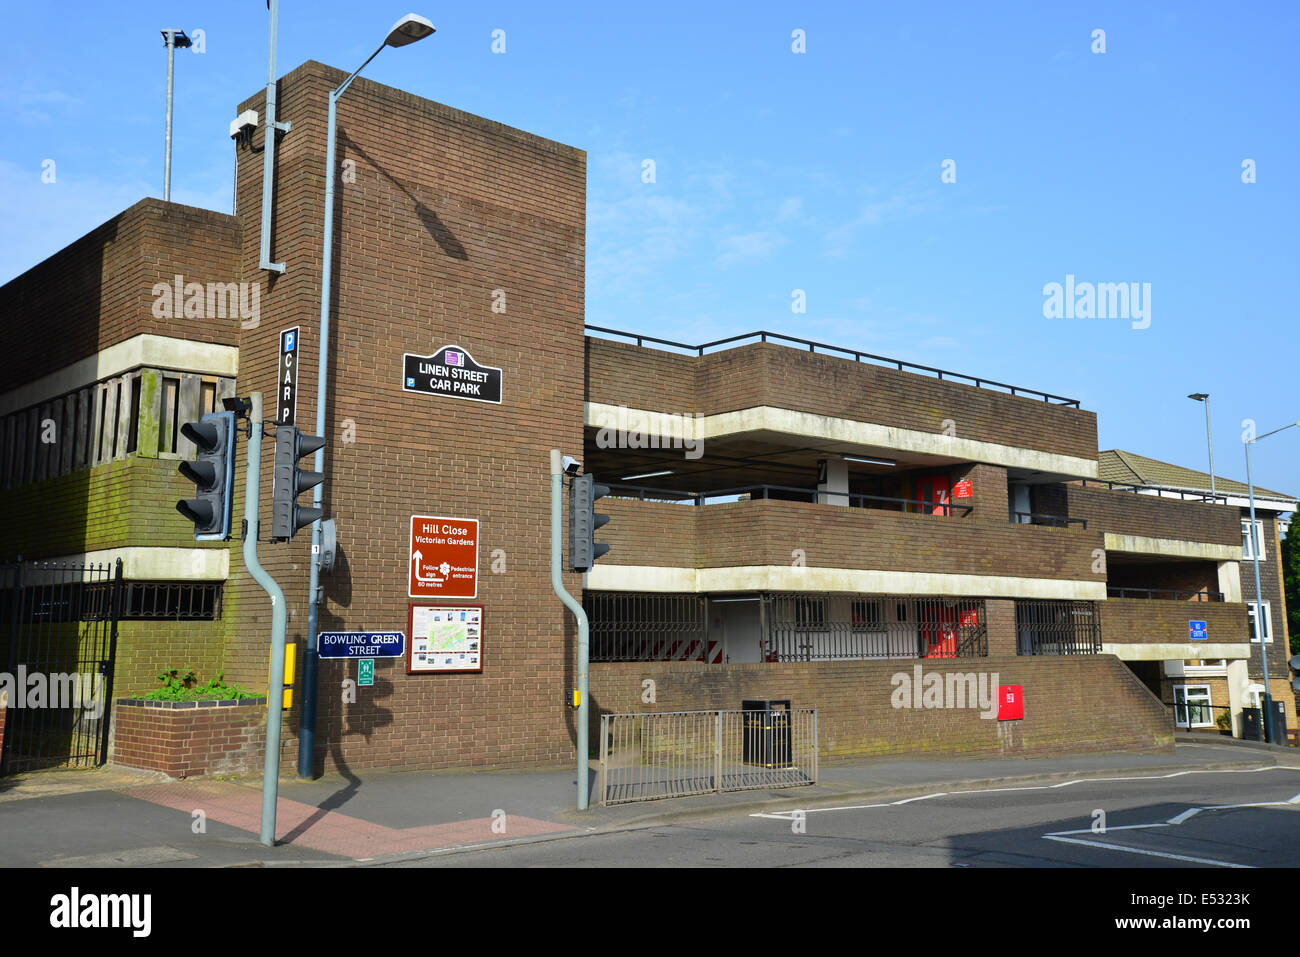 Linge de maison street parking à étages, Bowling Green Street, Warwick, Warwickshire, Angleterre, Royaume-Uni Banque D'Images